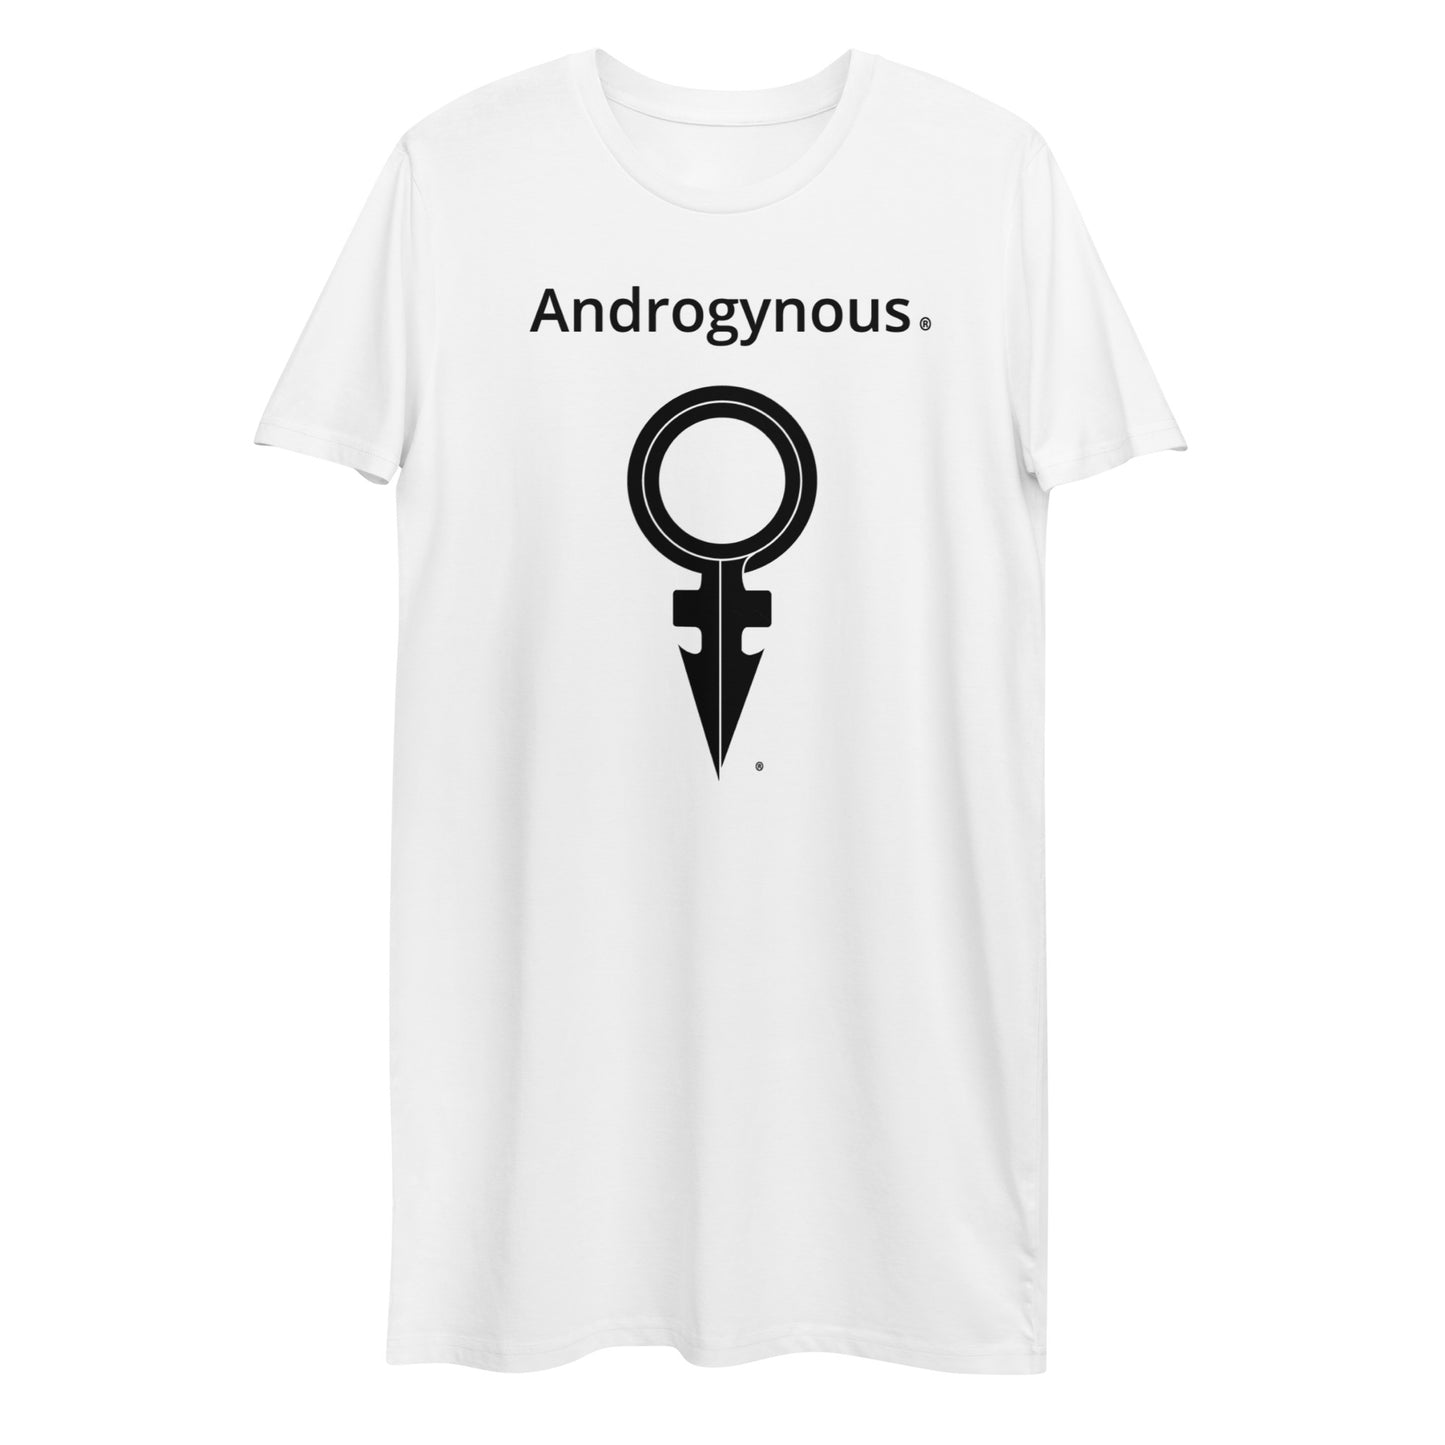 ANDROGYNOUS + SYMBOL BLACK ON WHITE PRINTED RINGSPUN Organic cotton t-shirt dress